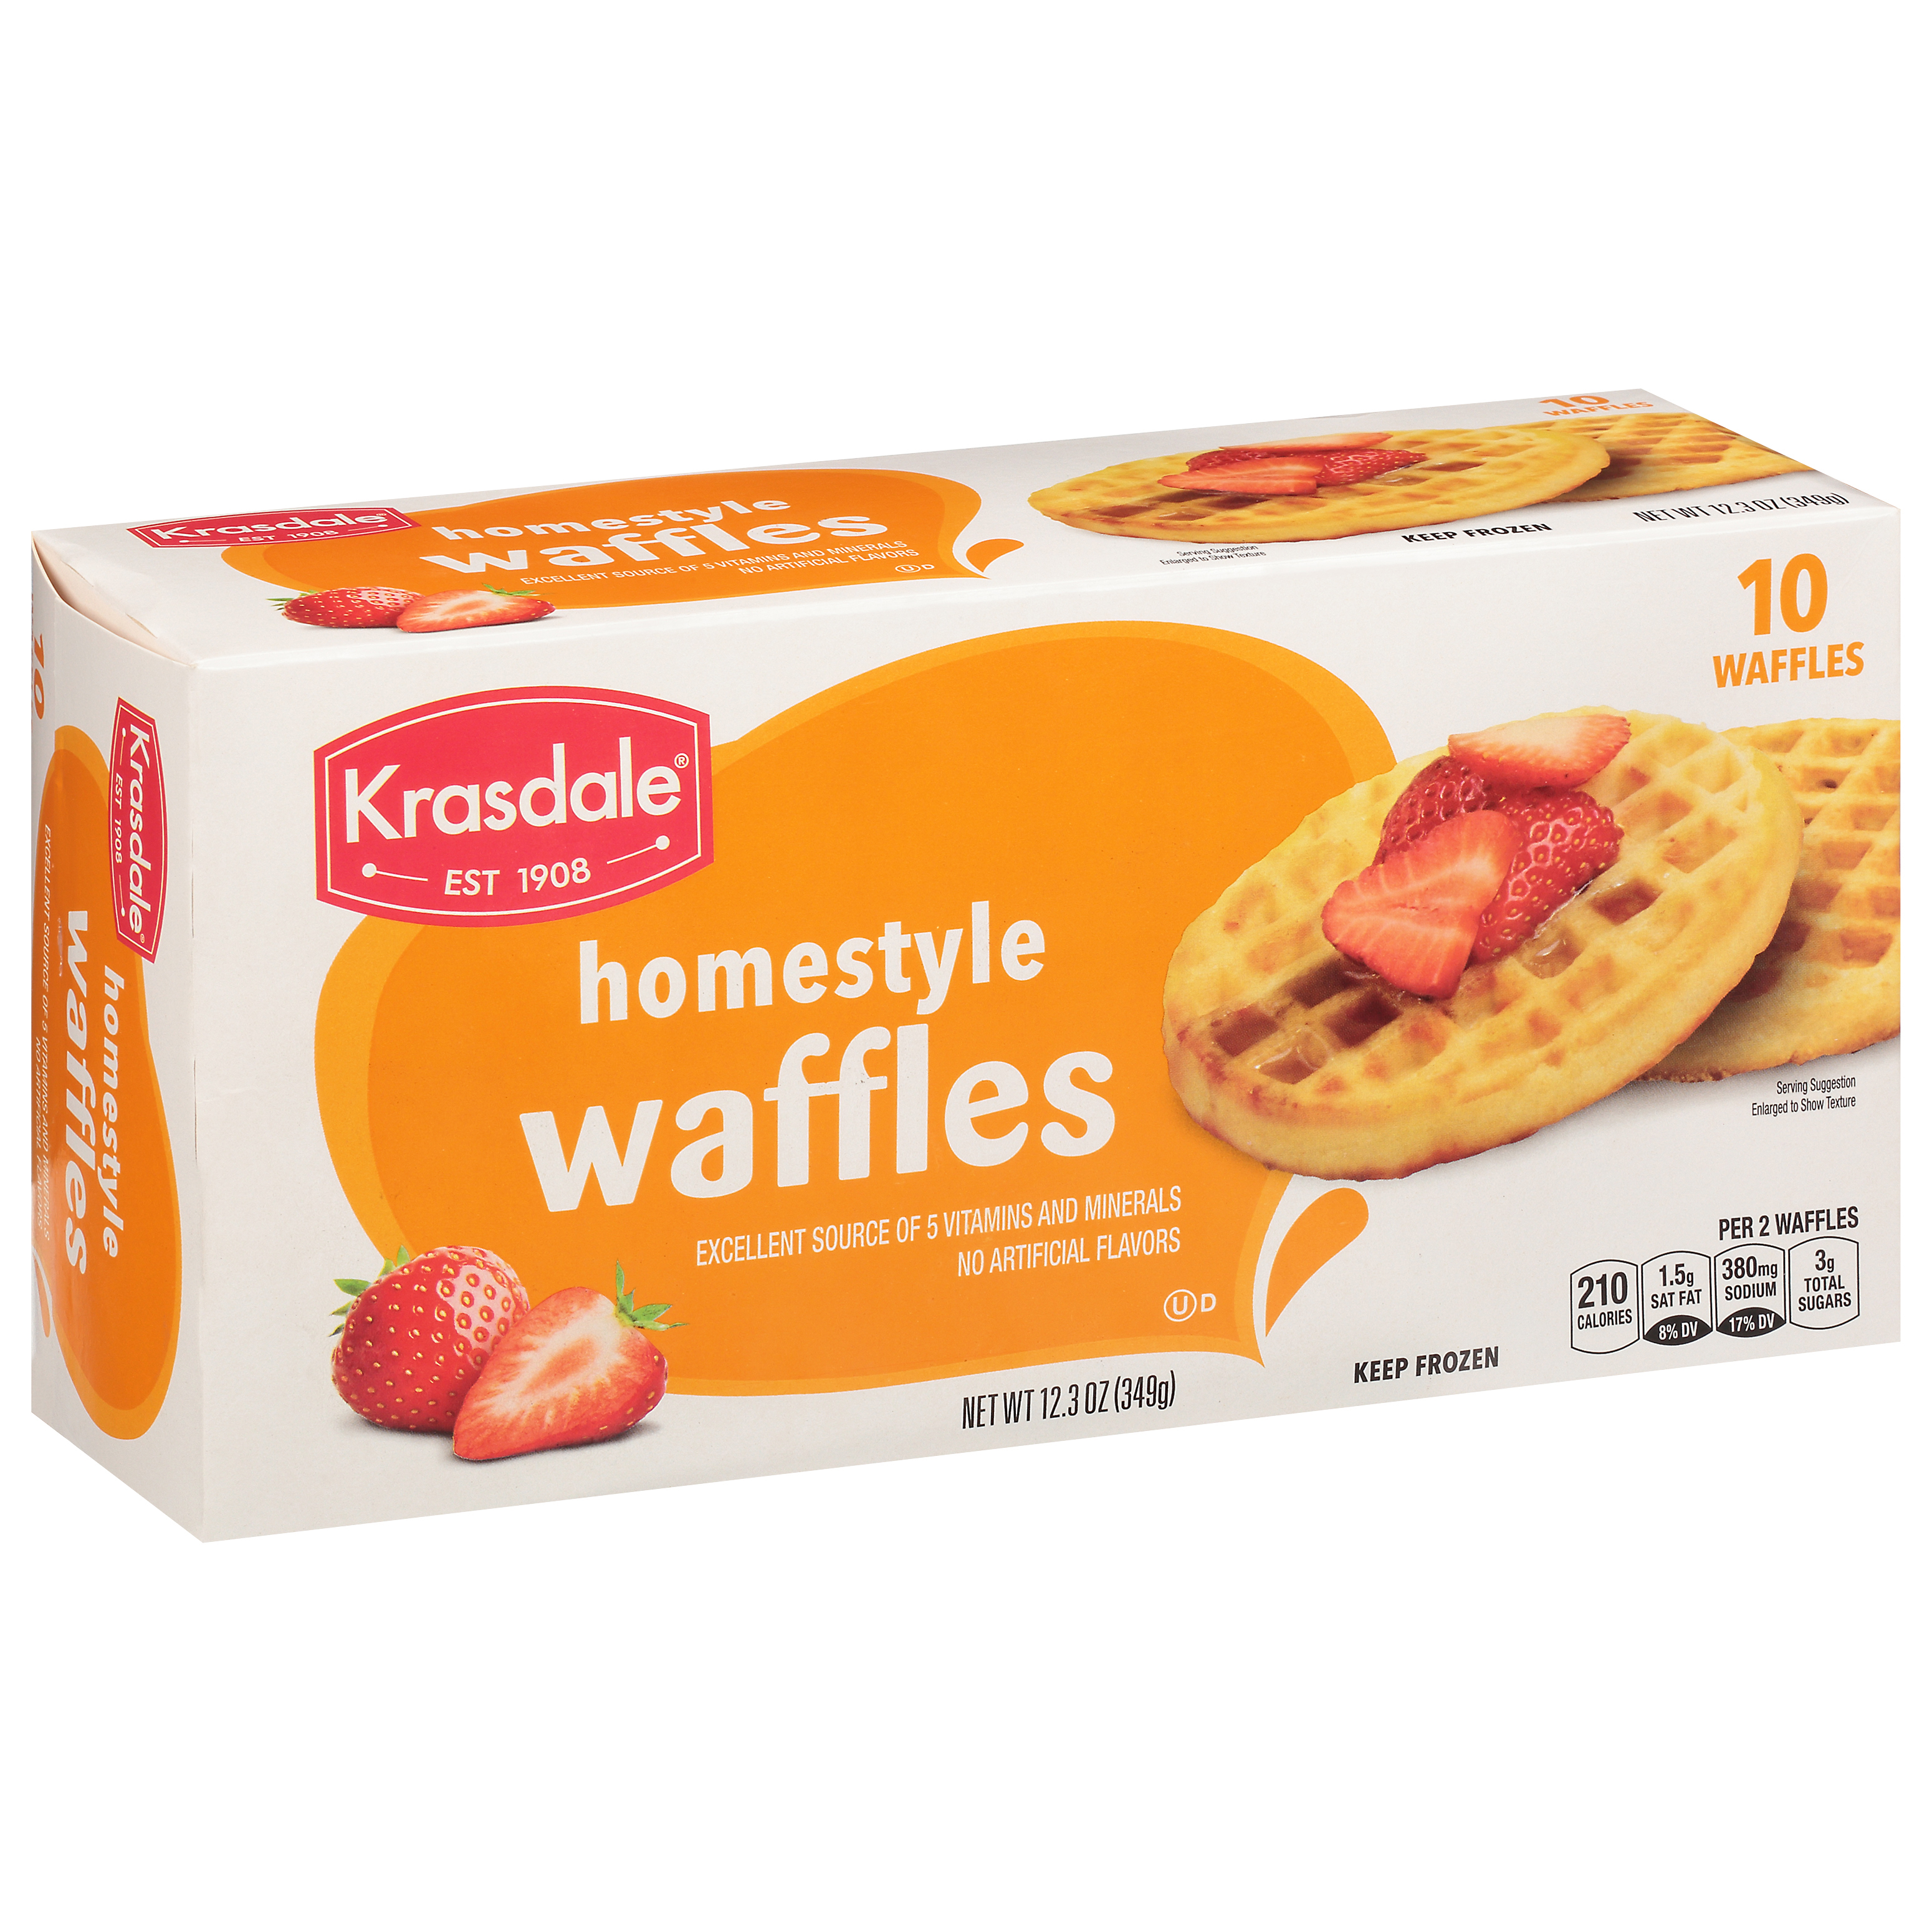 Krasdale Homestyle Waffles 10 Ea image